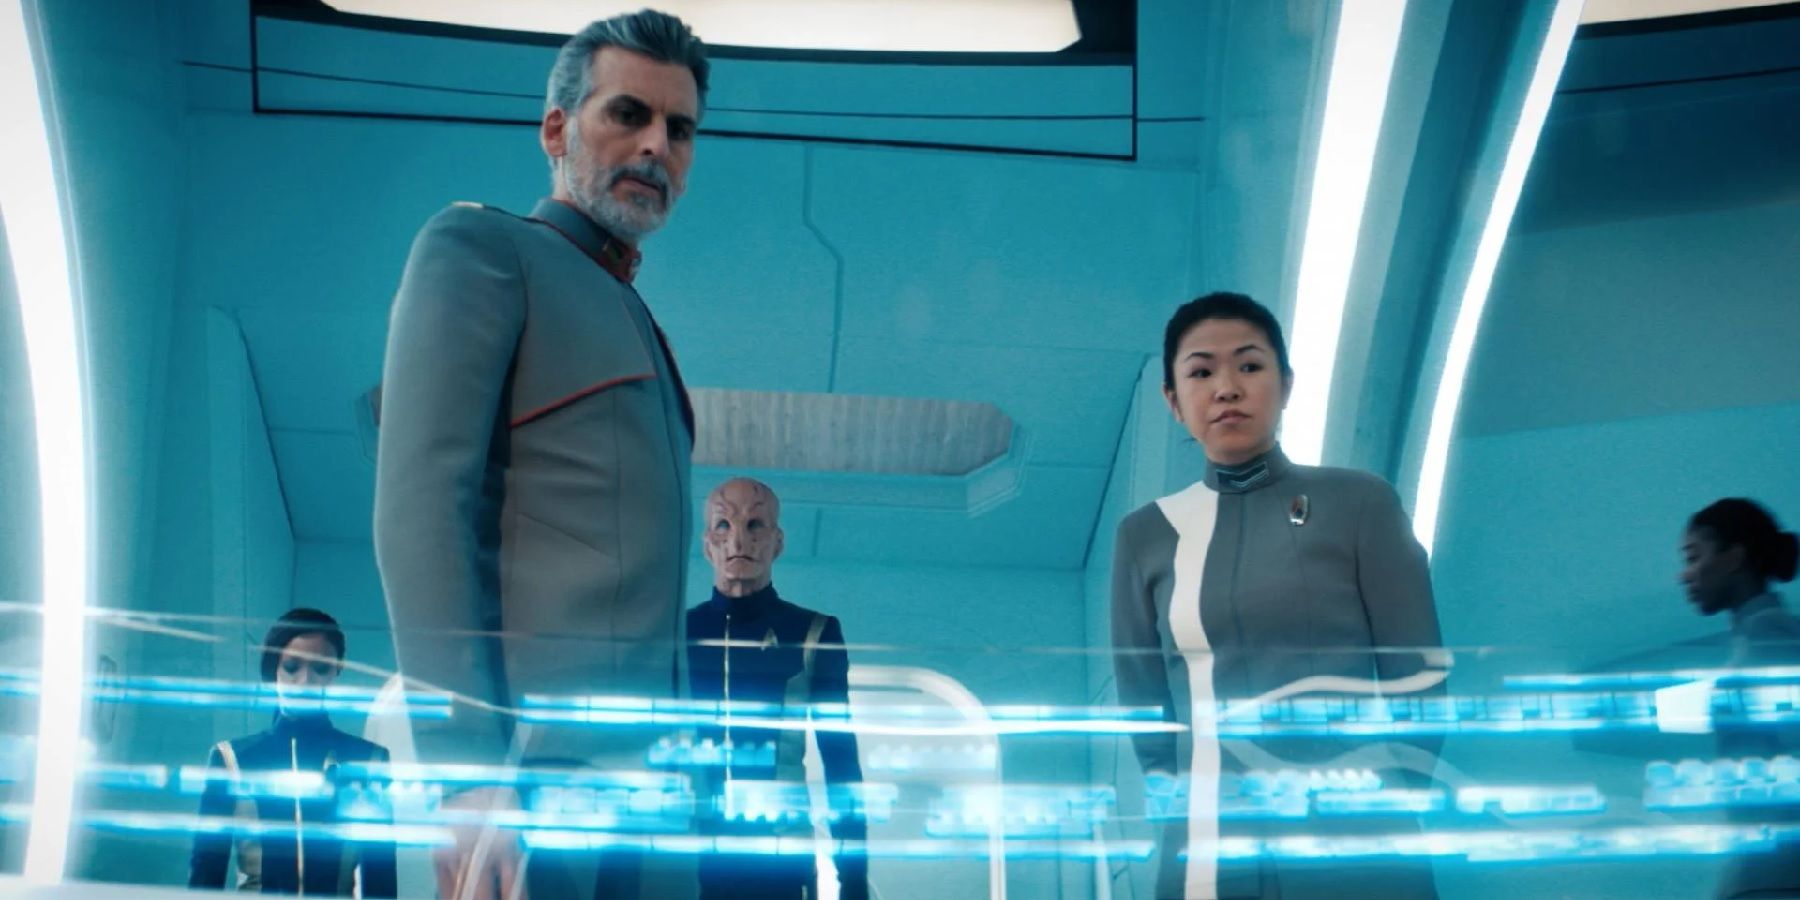 Burnham and Saru meet the 32nd century Federation in Star Trek Discovery